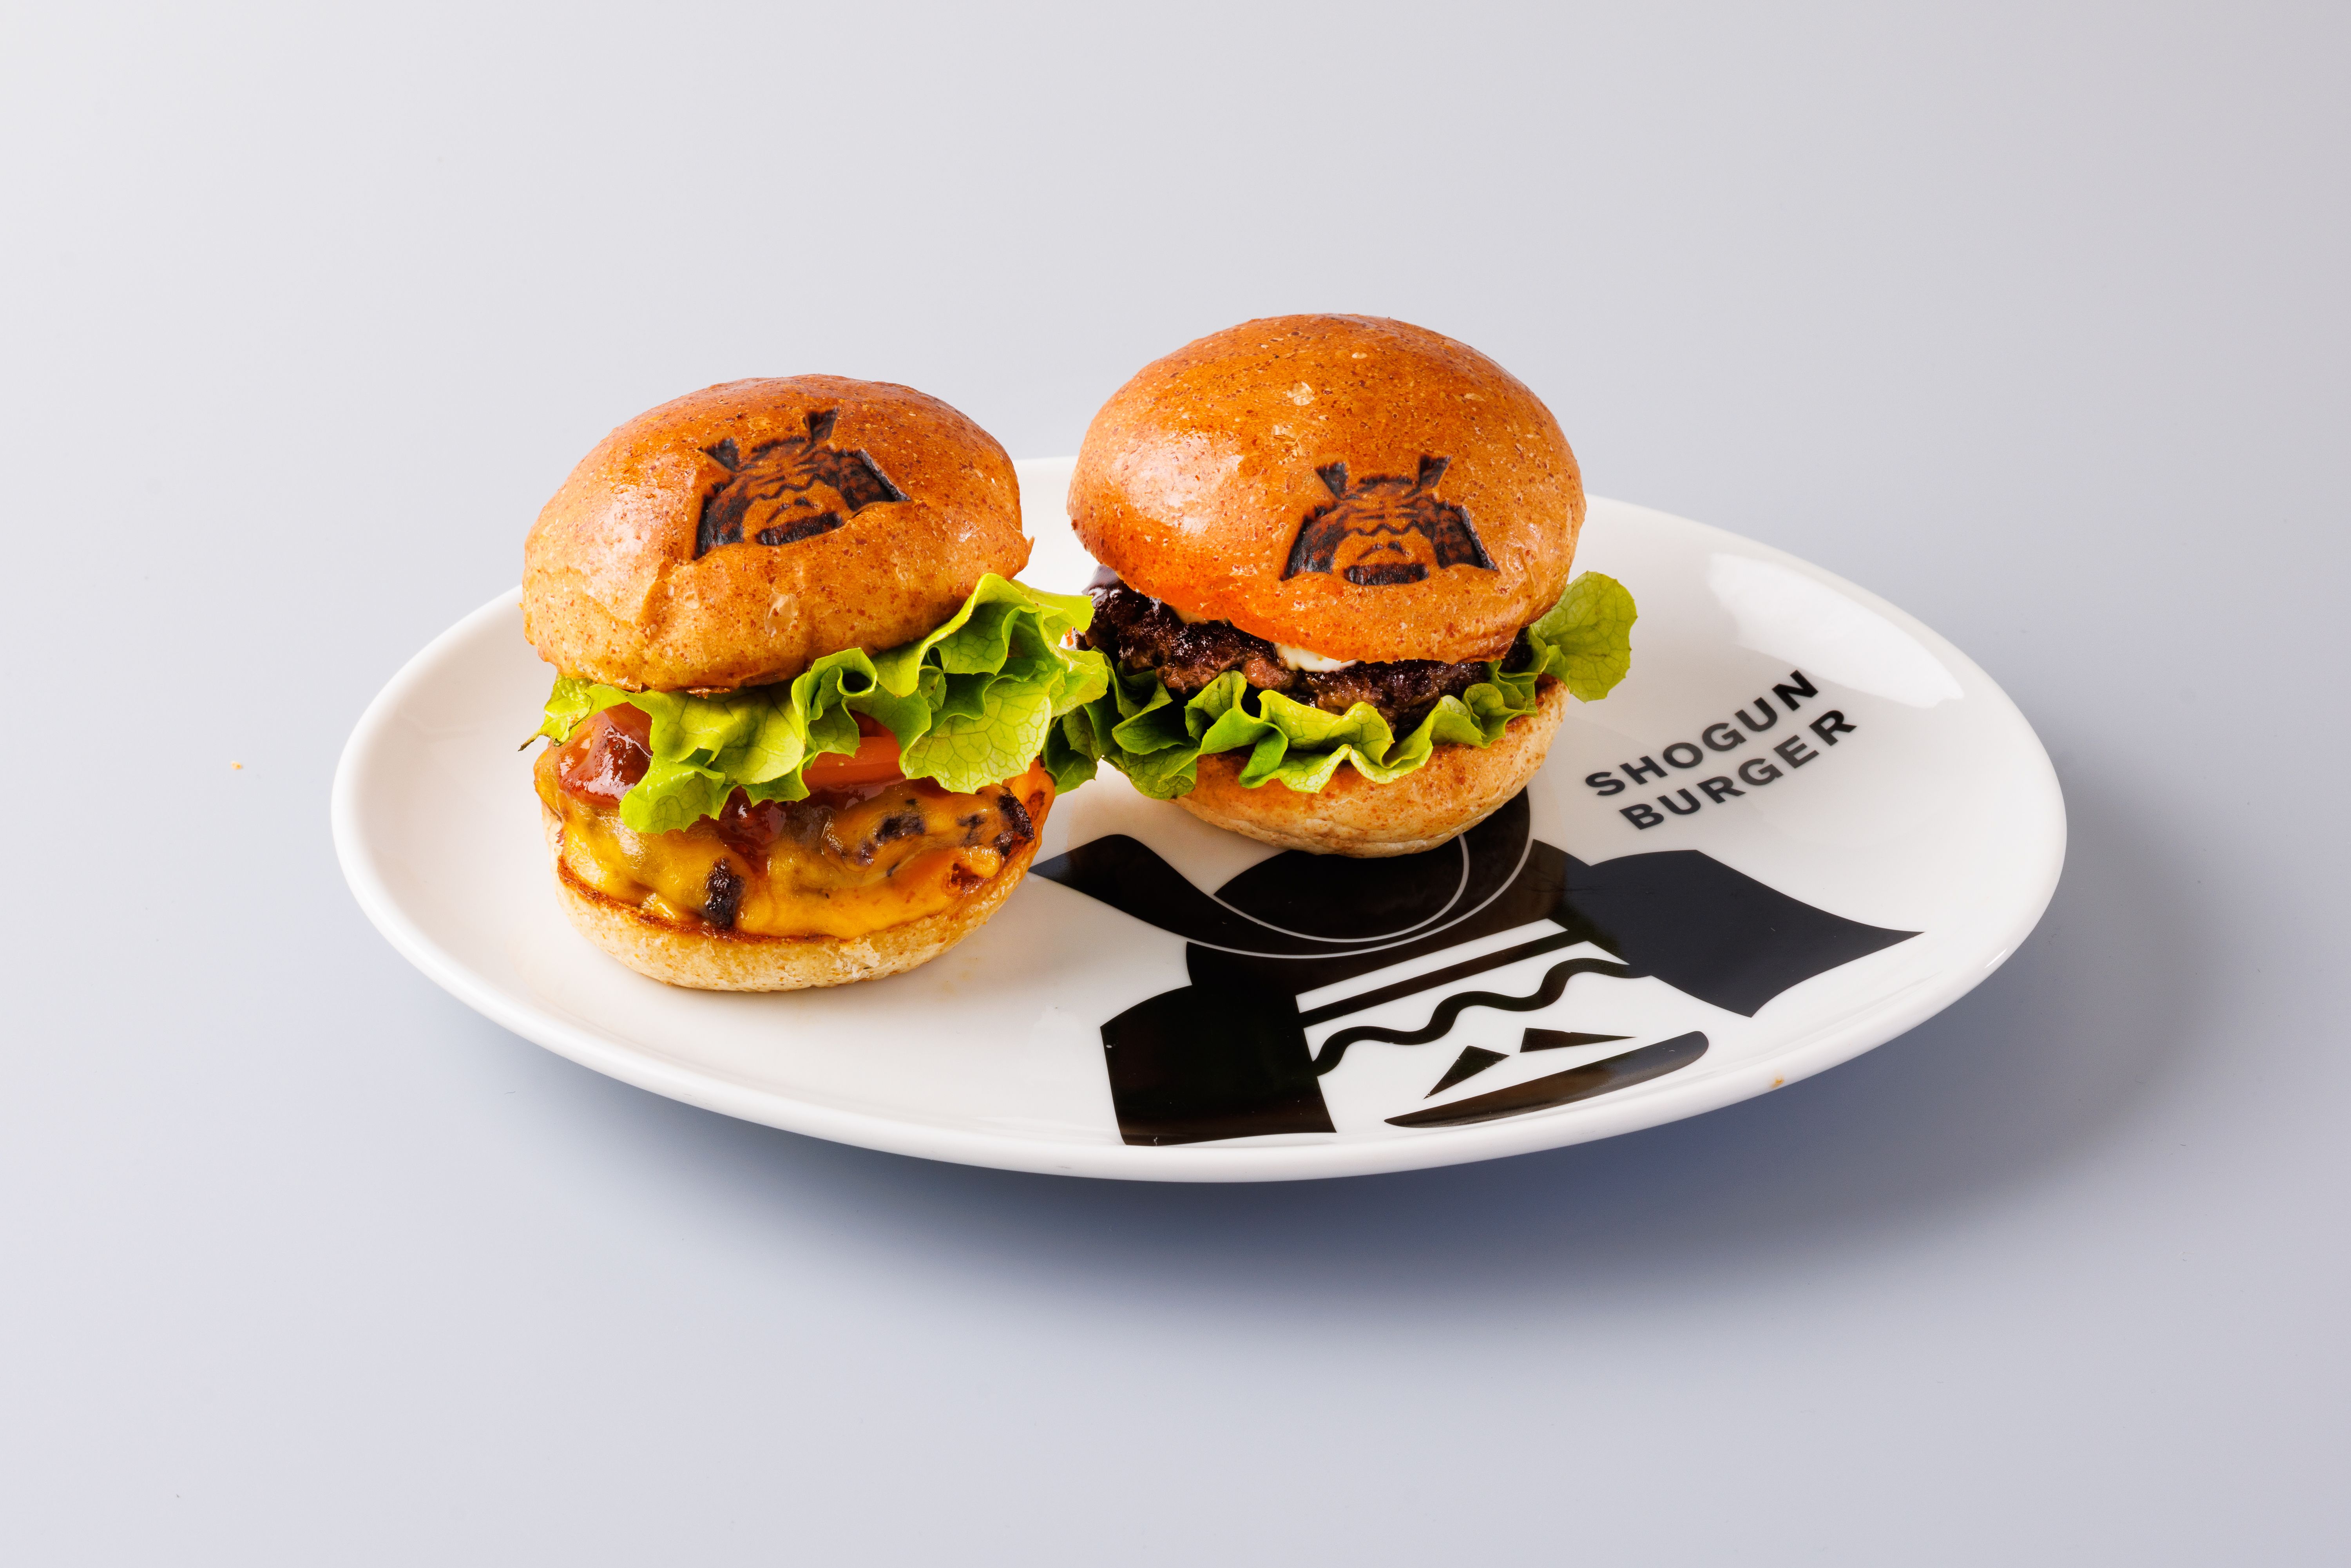 Shogun Burger 渋谷店限定バーガー６種 2月14日より全店舗で購入可能に 株式会社ガネーシャのプレスリリース